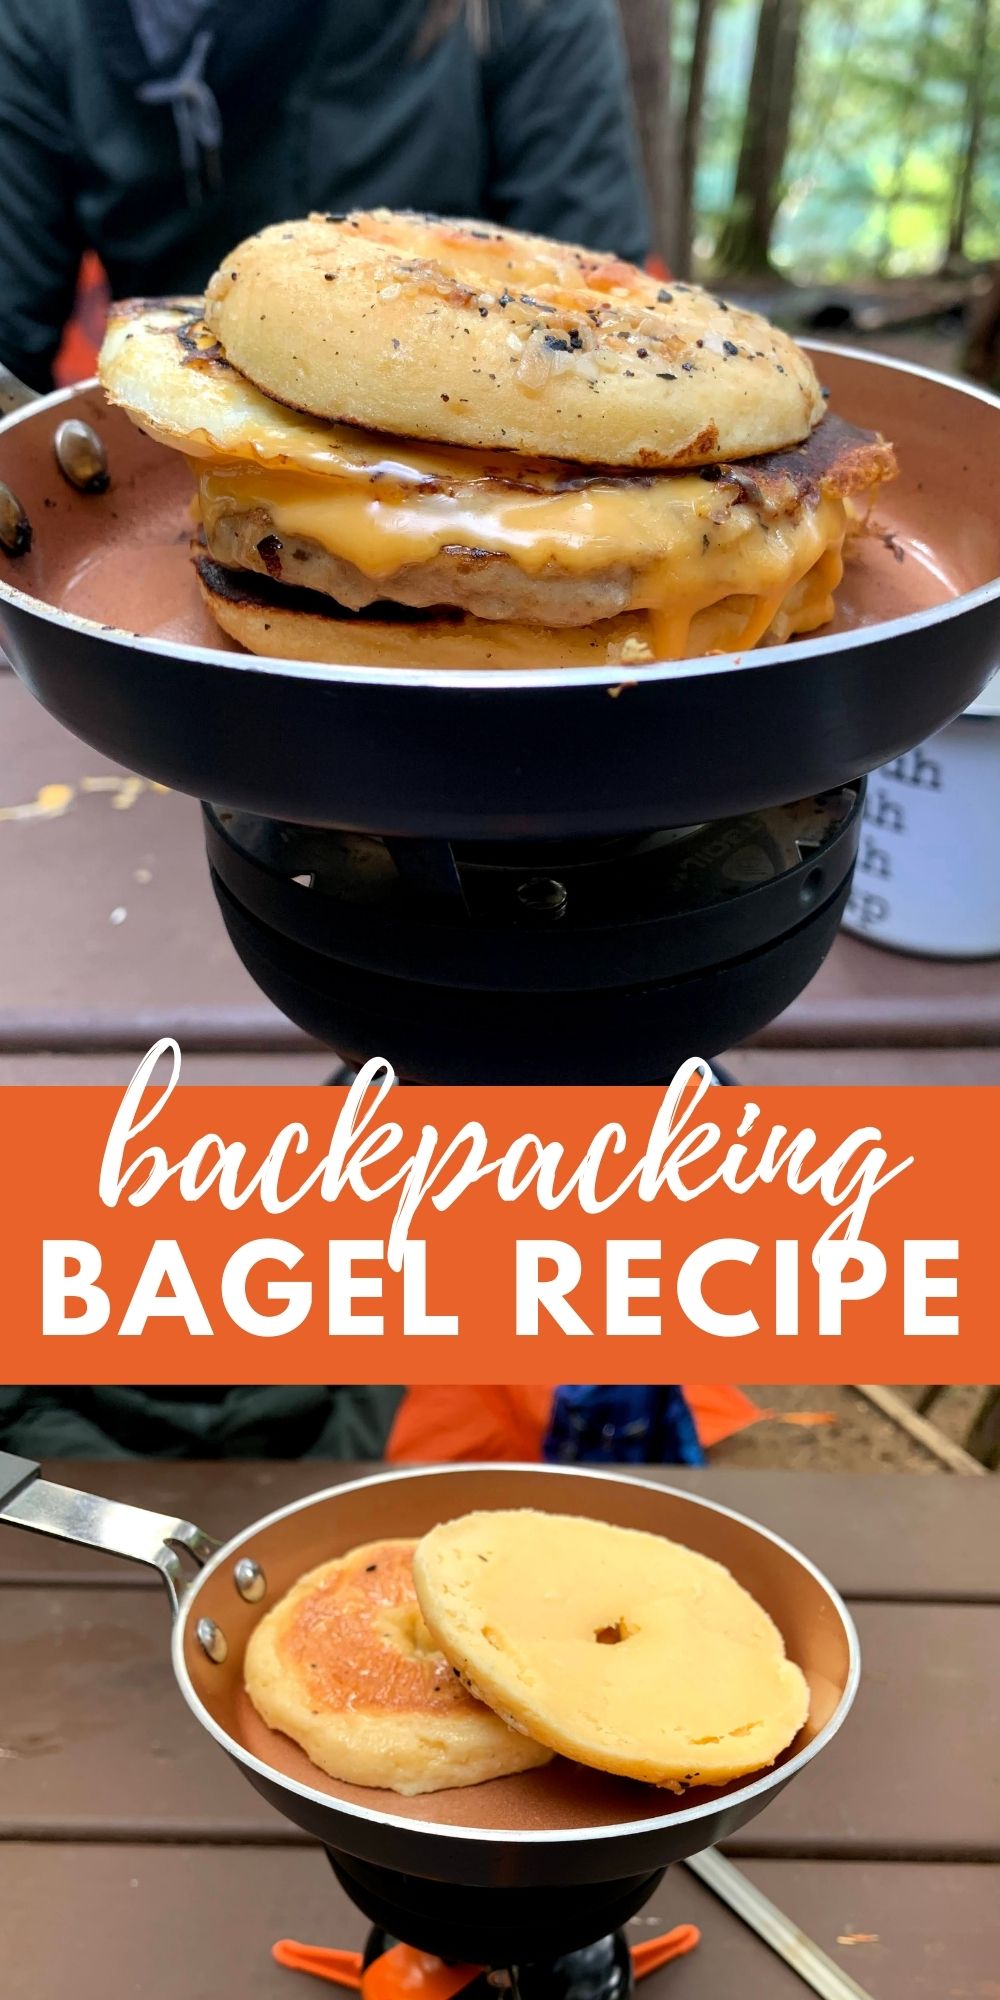 Backpacking Bagel Recipe